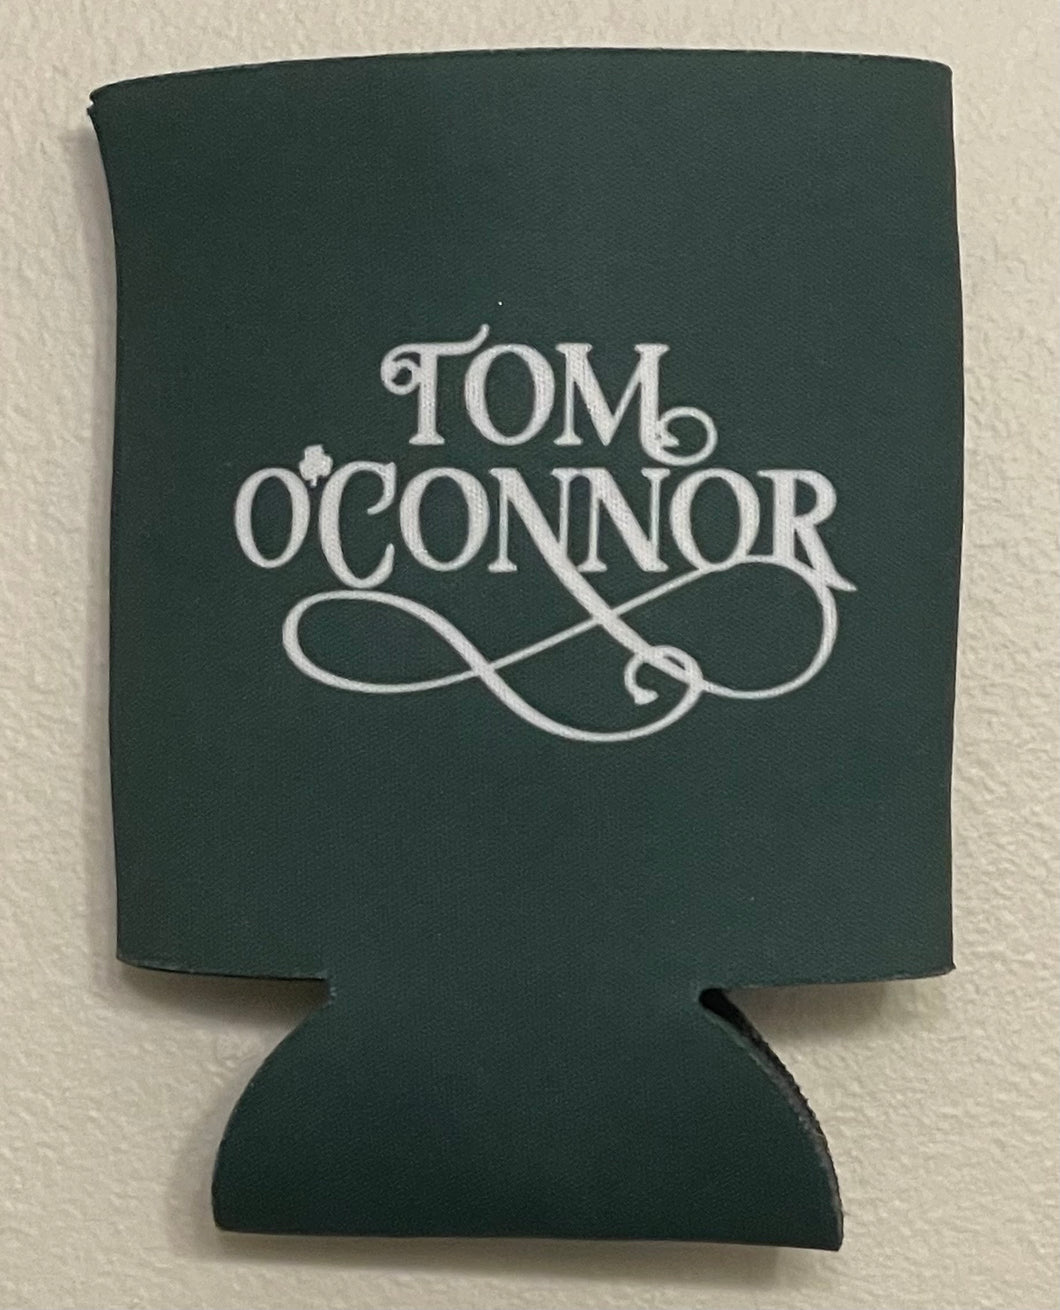 Tom O’Connor Koozie